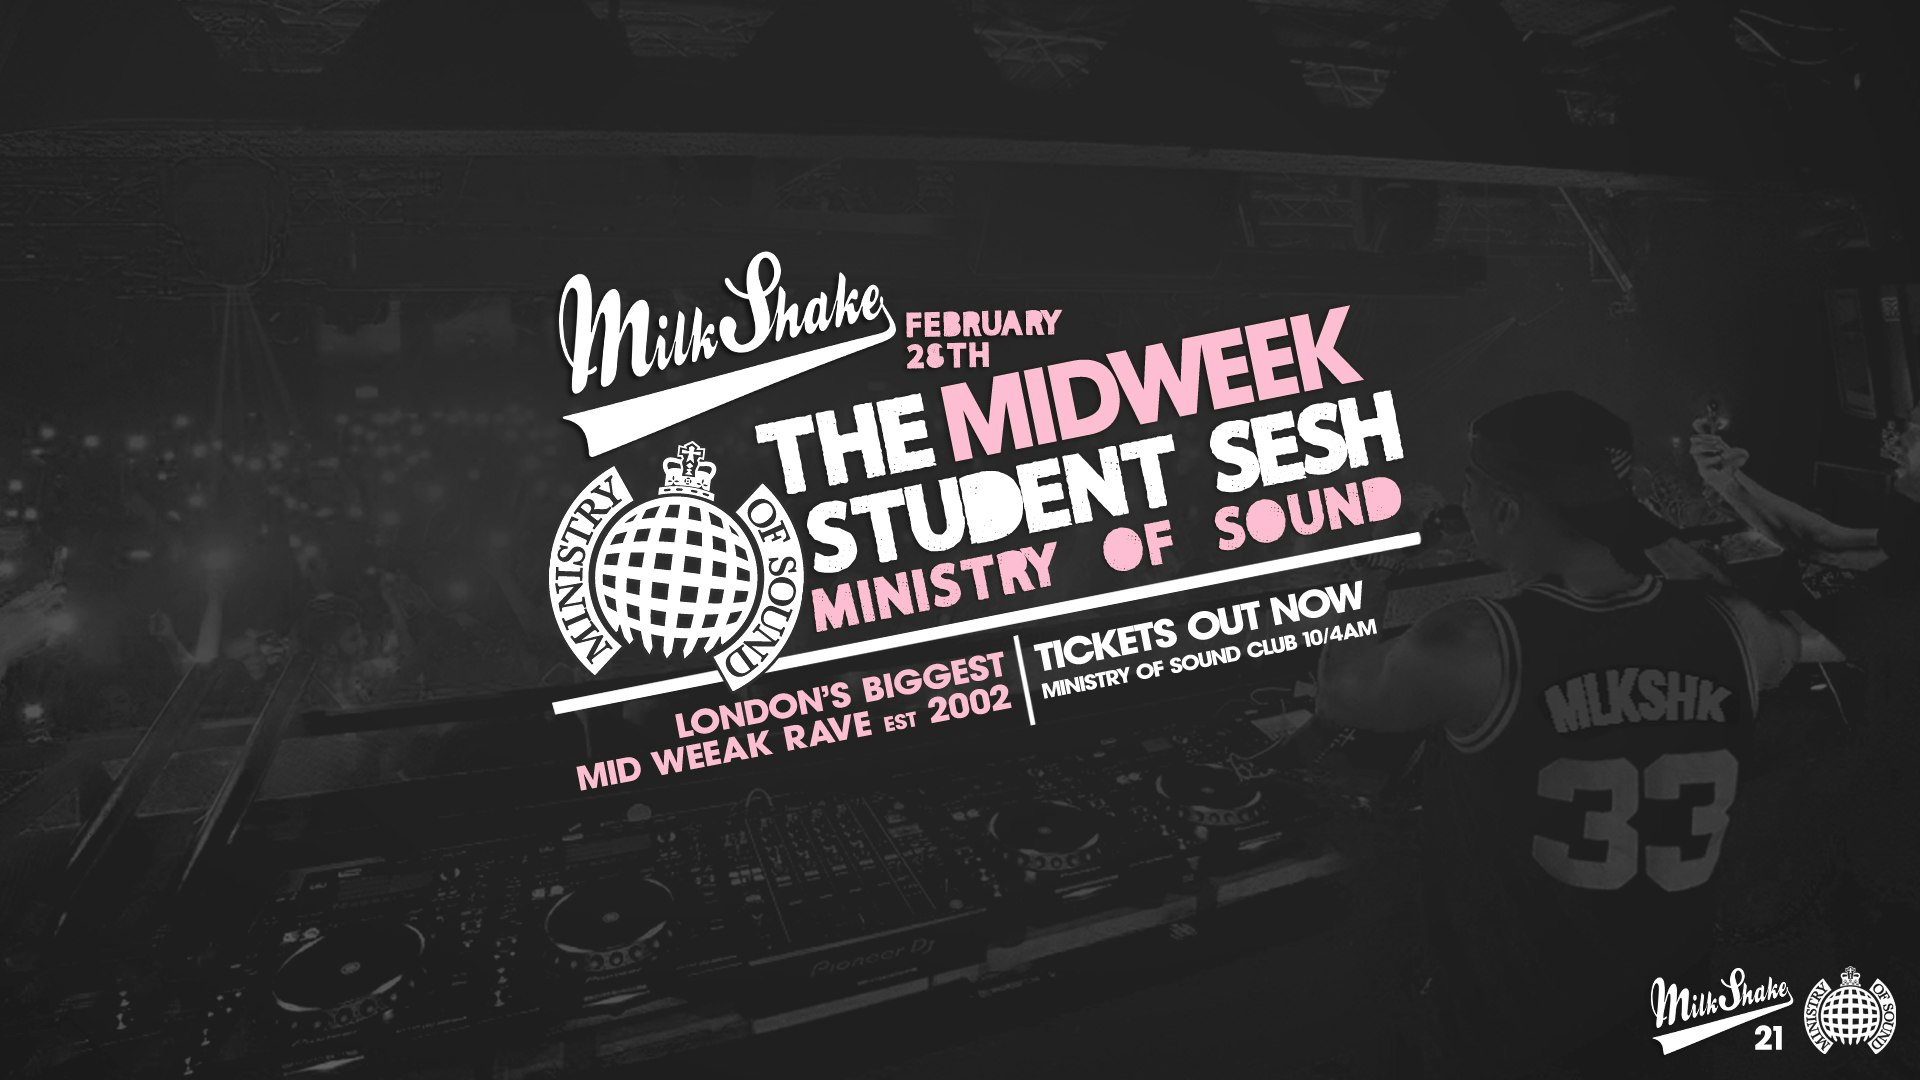 Milkshake, Ministry of Sound | London’s Biggest Student Night 🔥 Feb 28th 🌍